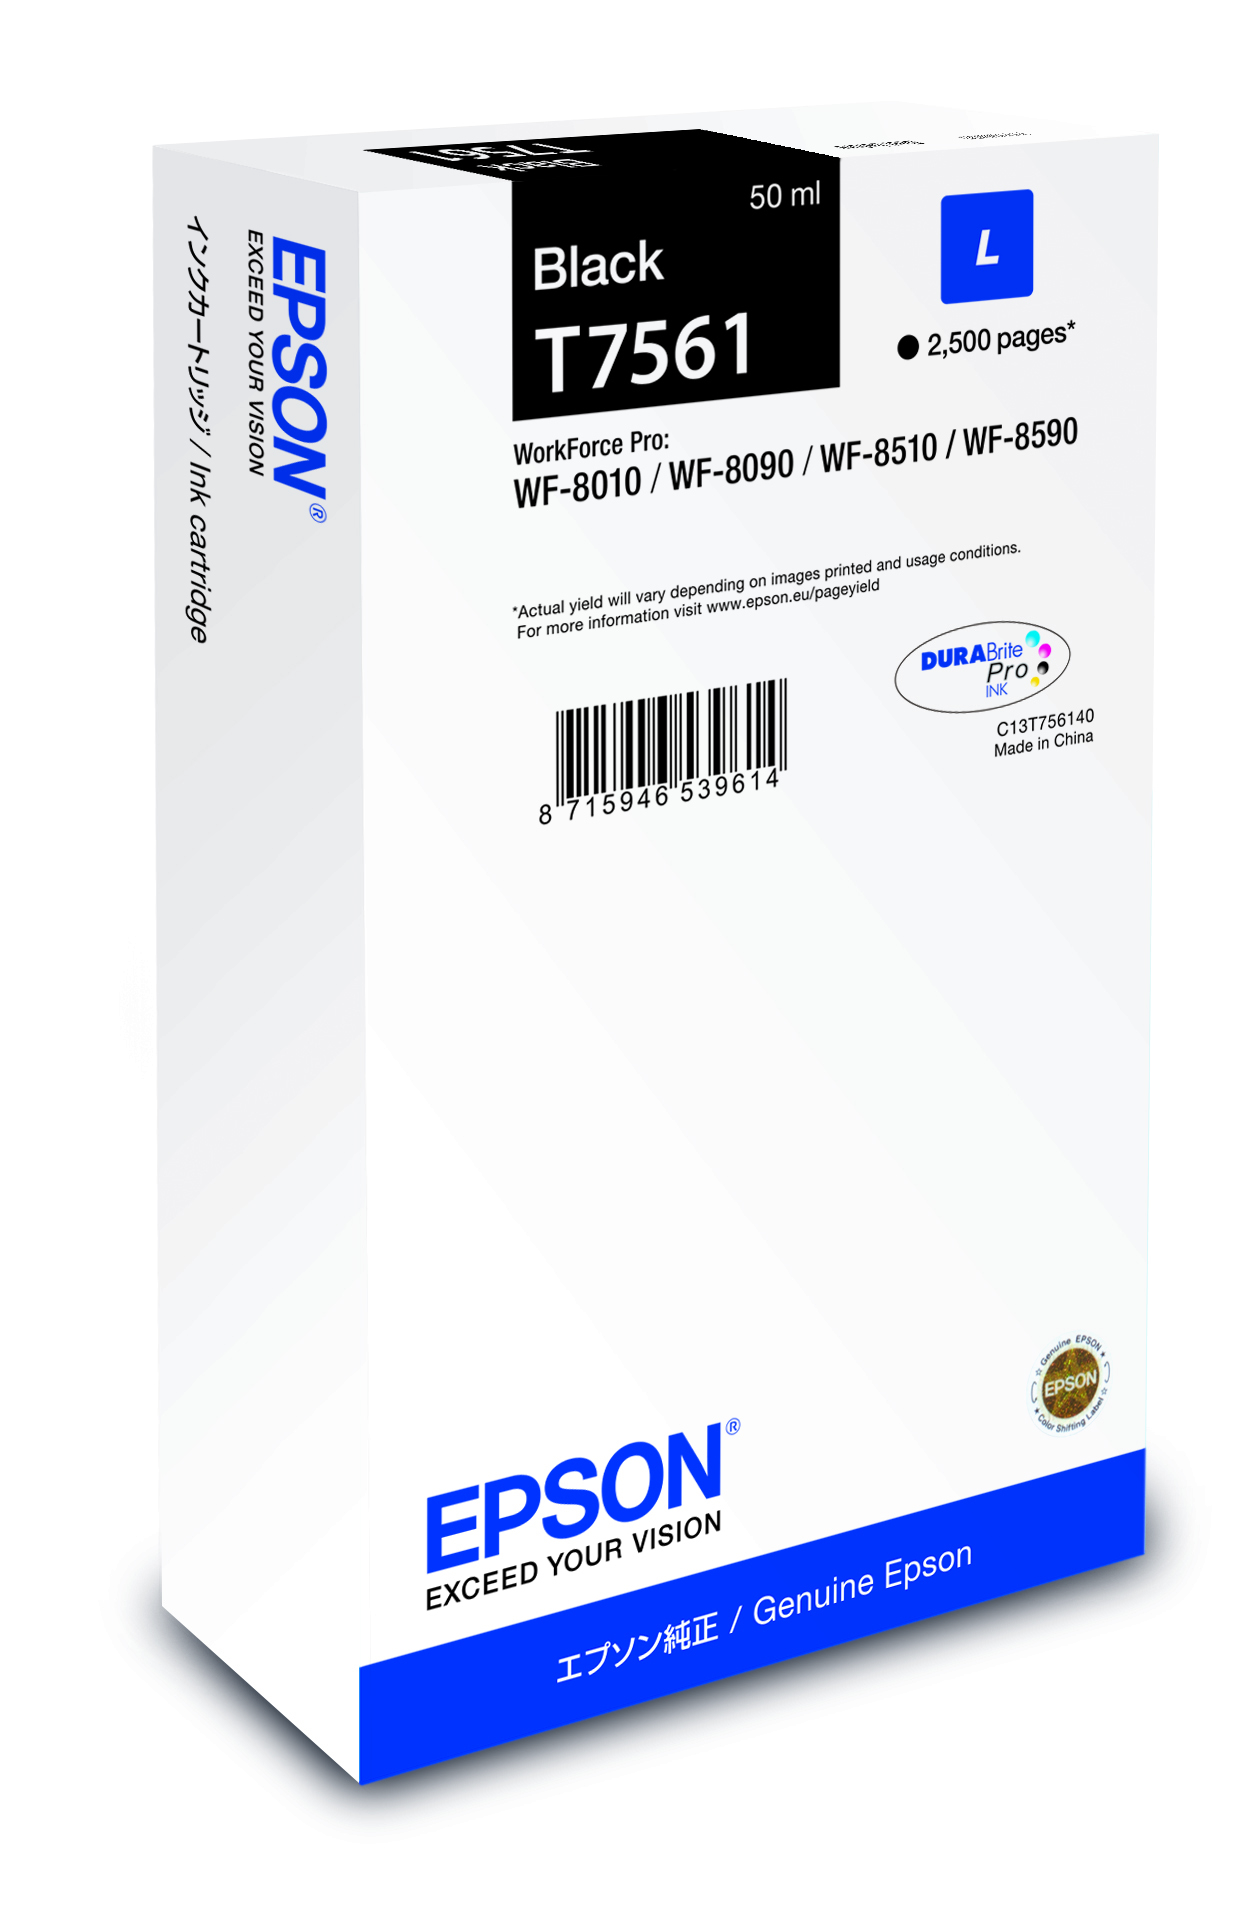 Epson Ink Cartridge L Black single pack / zwart